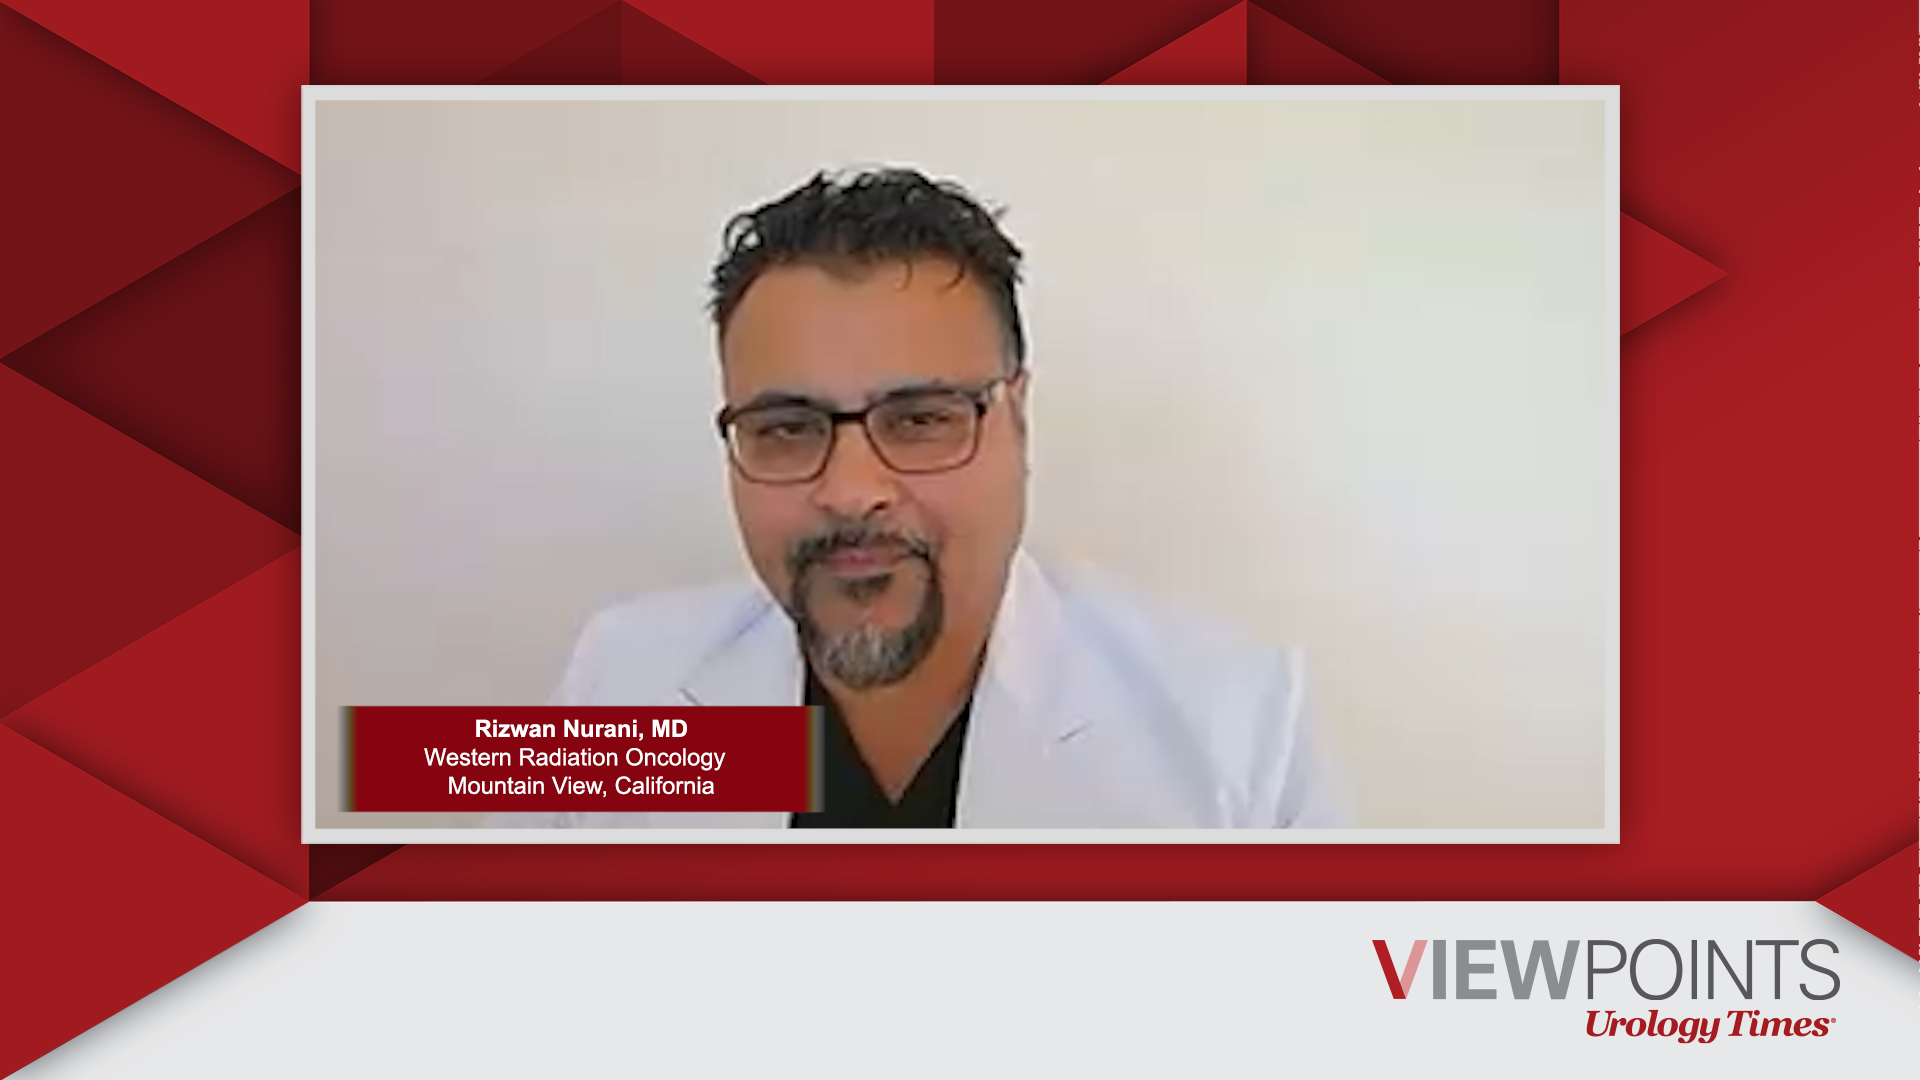 Rizwan Nurani, MD, an expert on prostate cancer